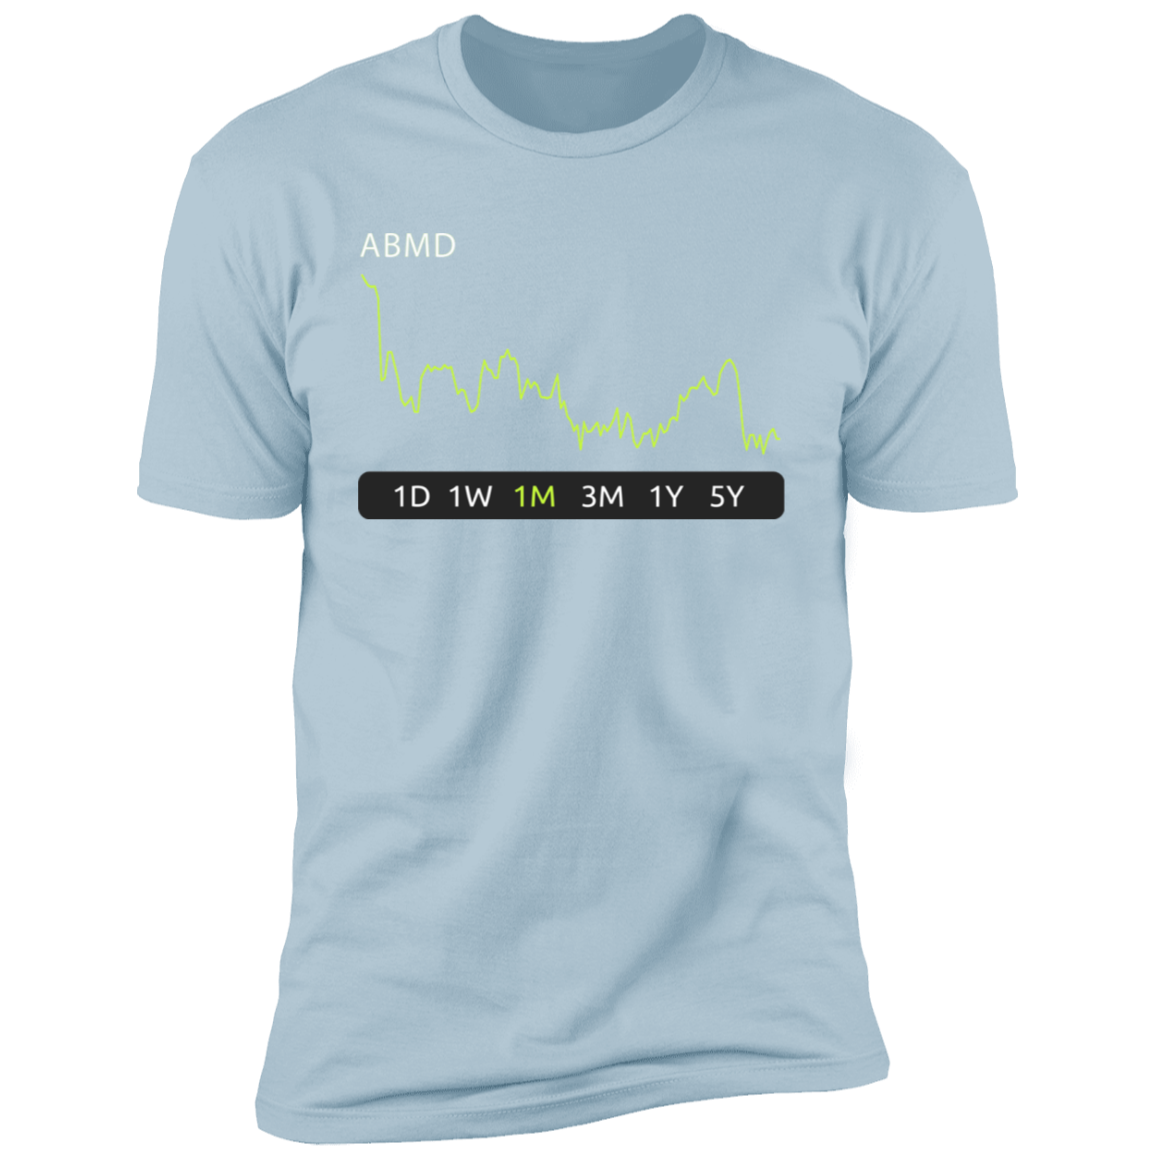 ABMD Stock 1m Premium T-Shirt